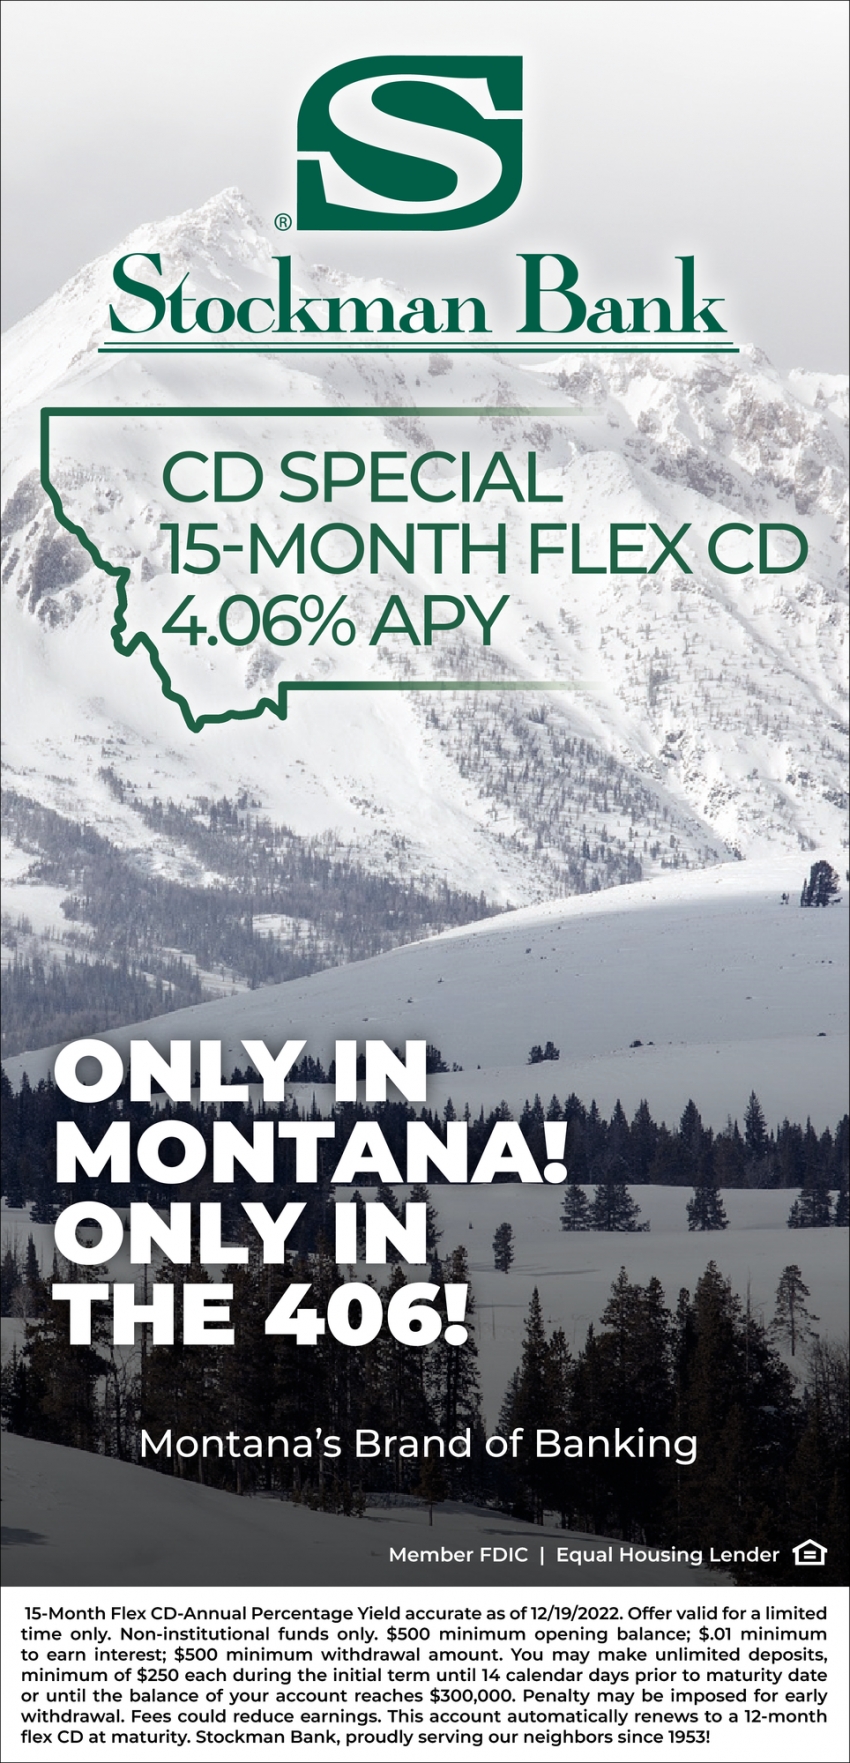 CD Special 15-Month Flex CD 4.06%